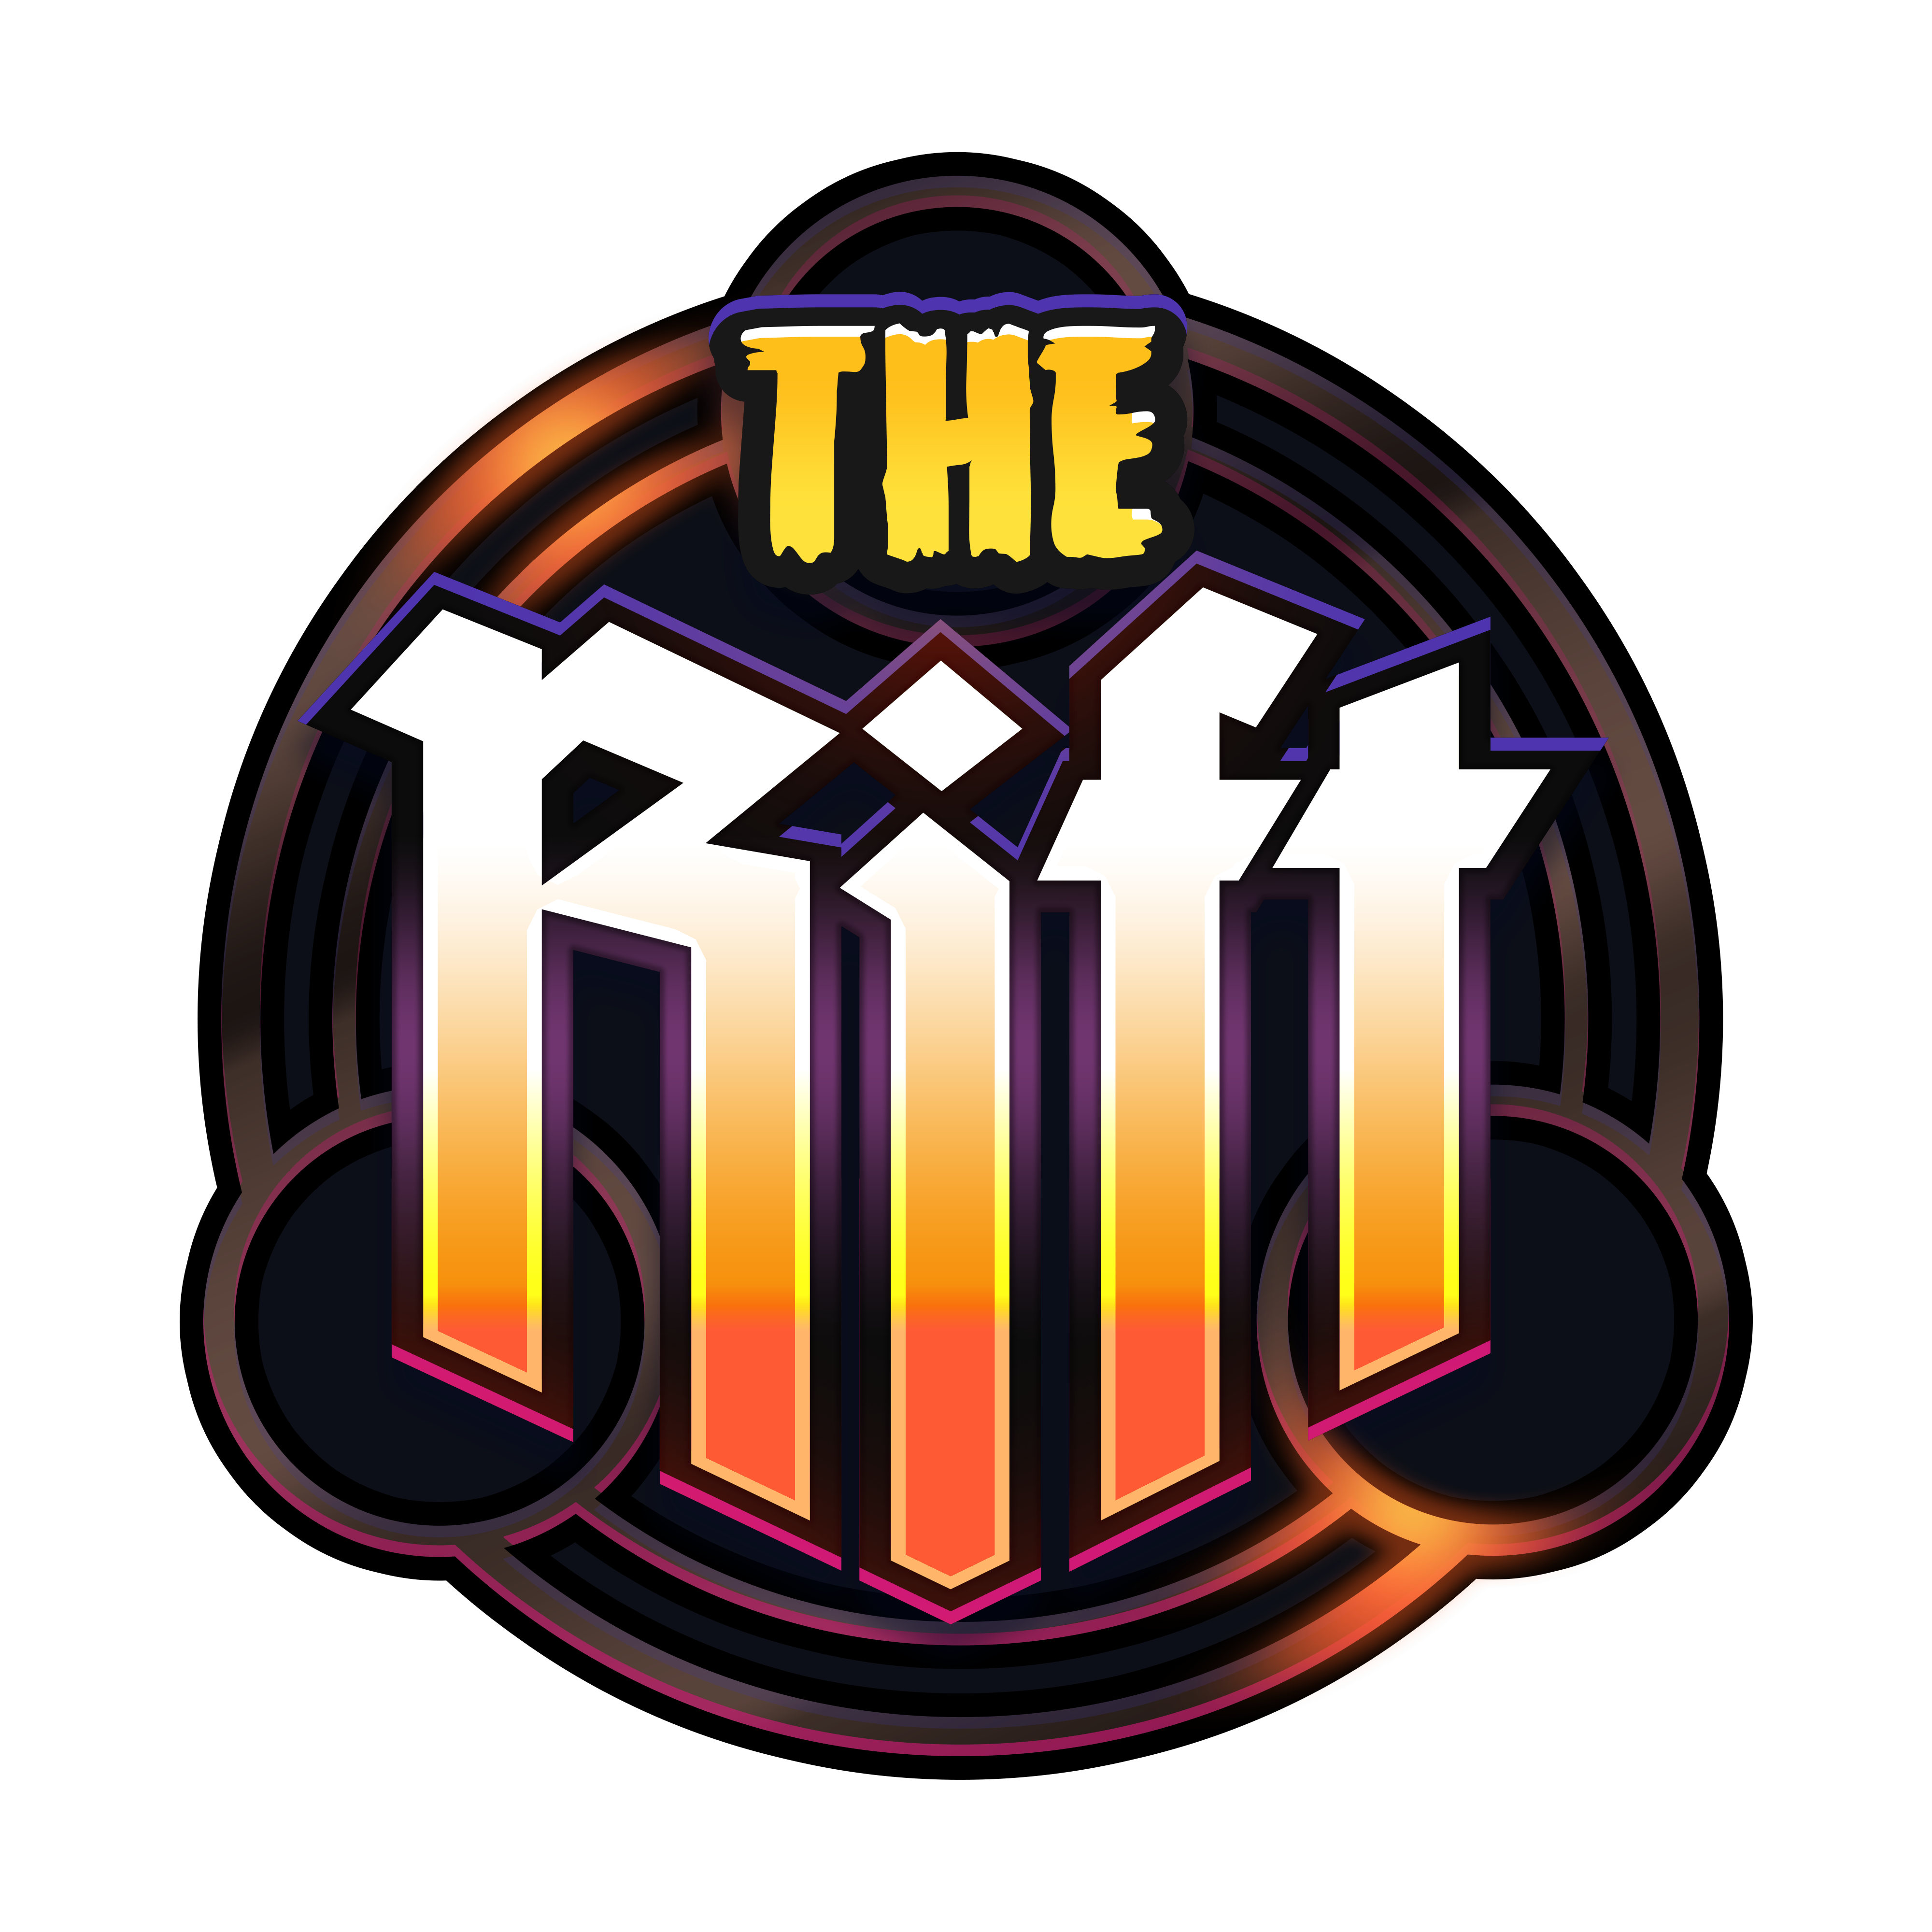 the_rift